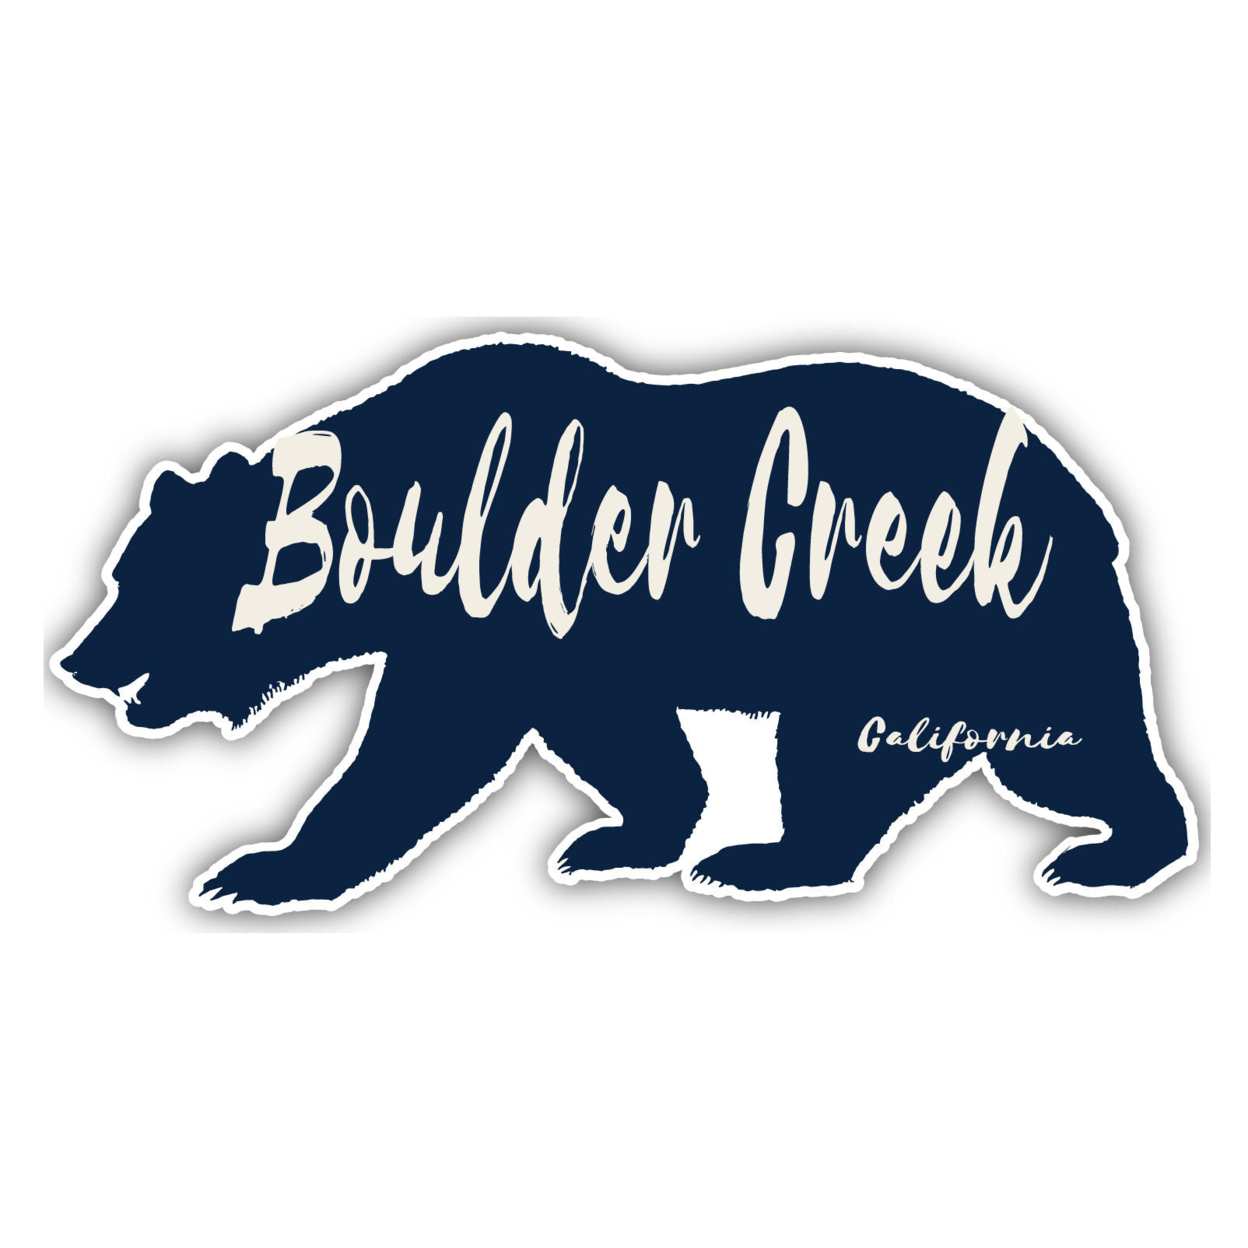 Boulder Creek California Souvenir Decorative Stickers (Choose Theme And Size) - 4-Pack, 10-Inch, Bear